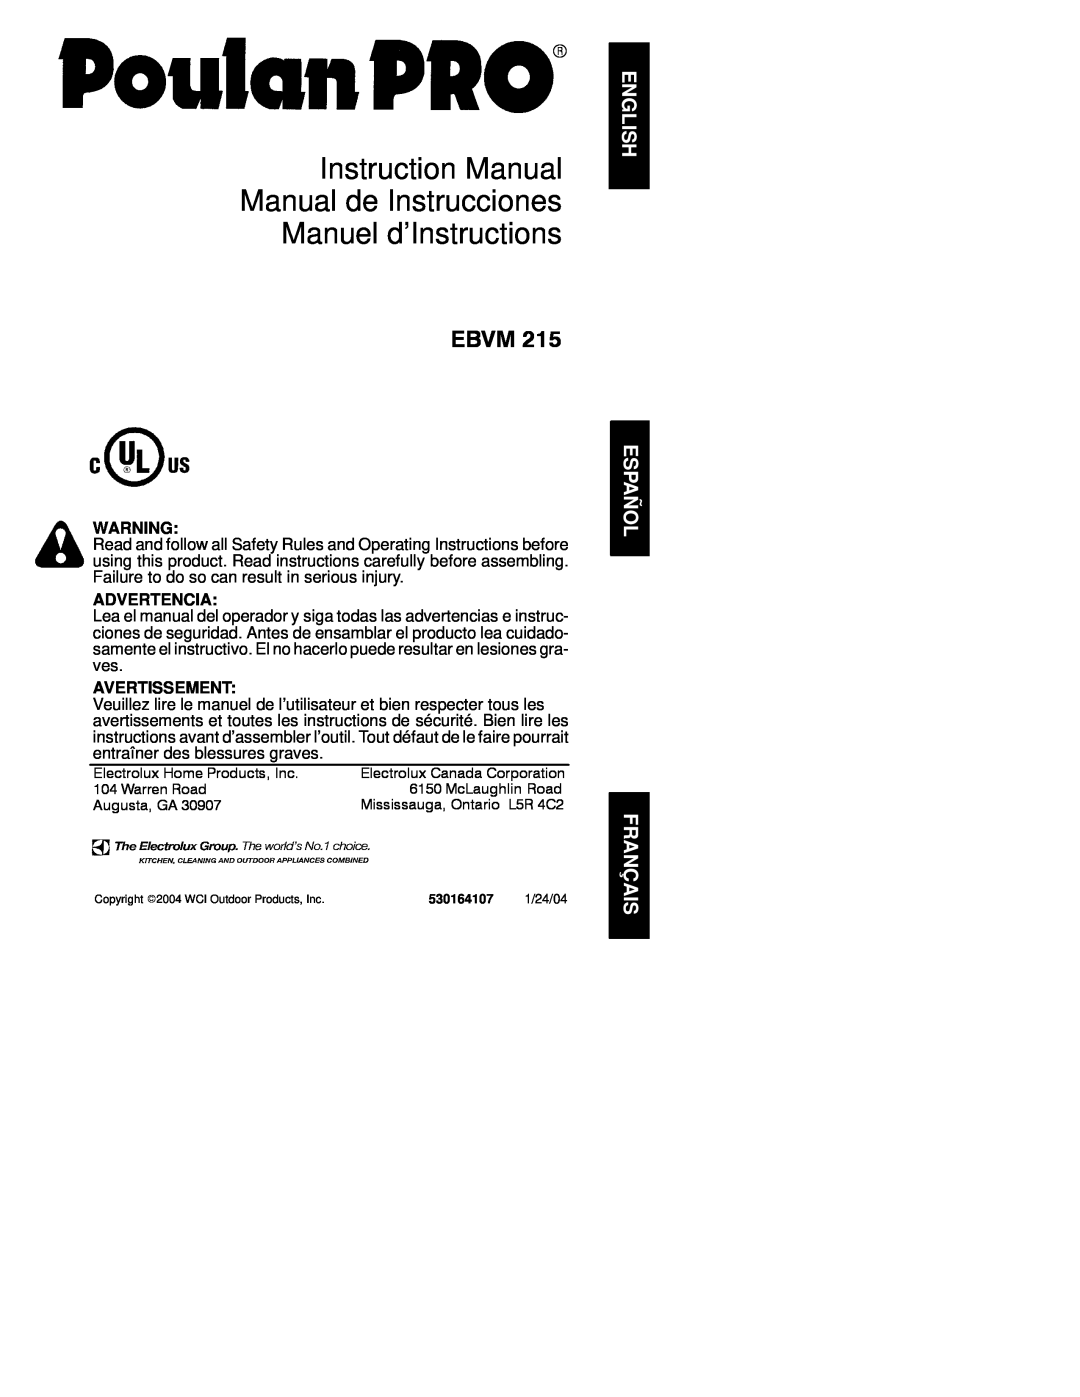 Poulan 530164107 instruction manual Advertencia, Avertissement, Ebvm 